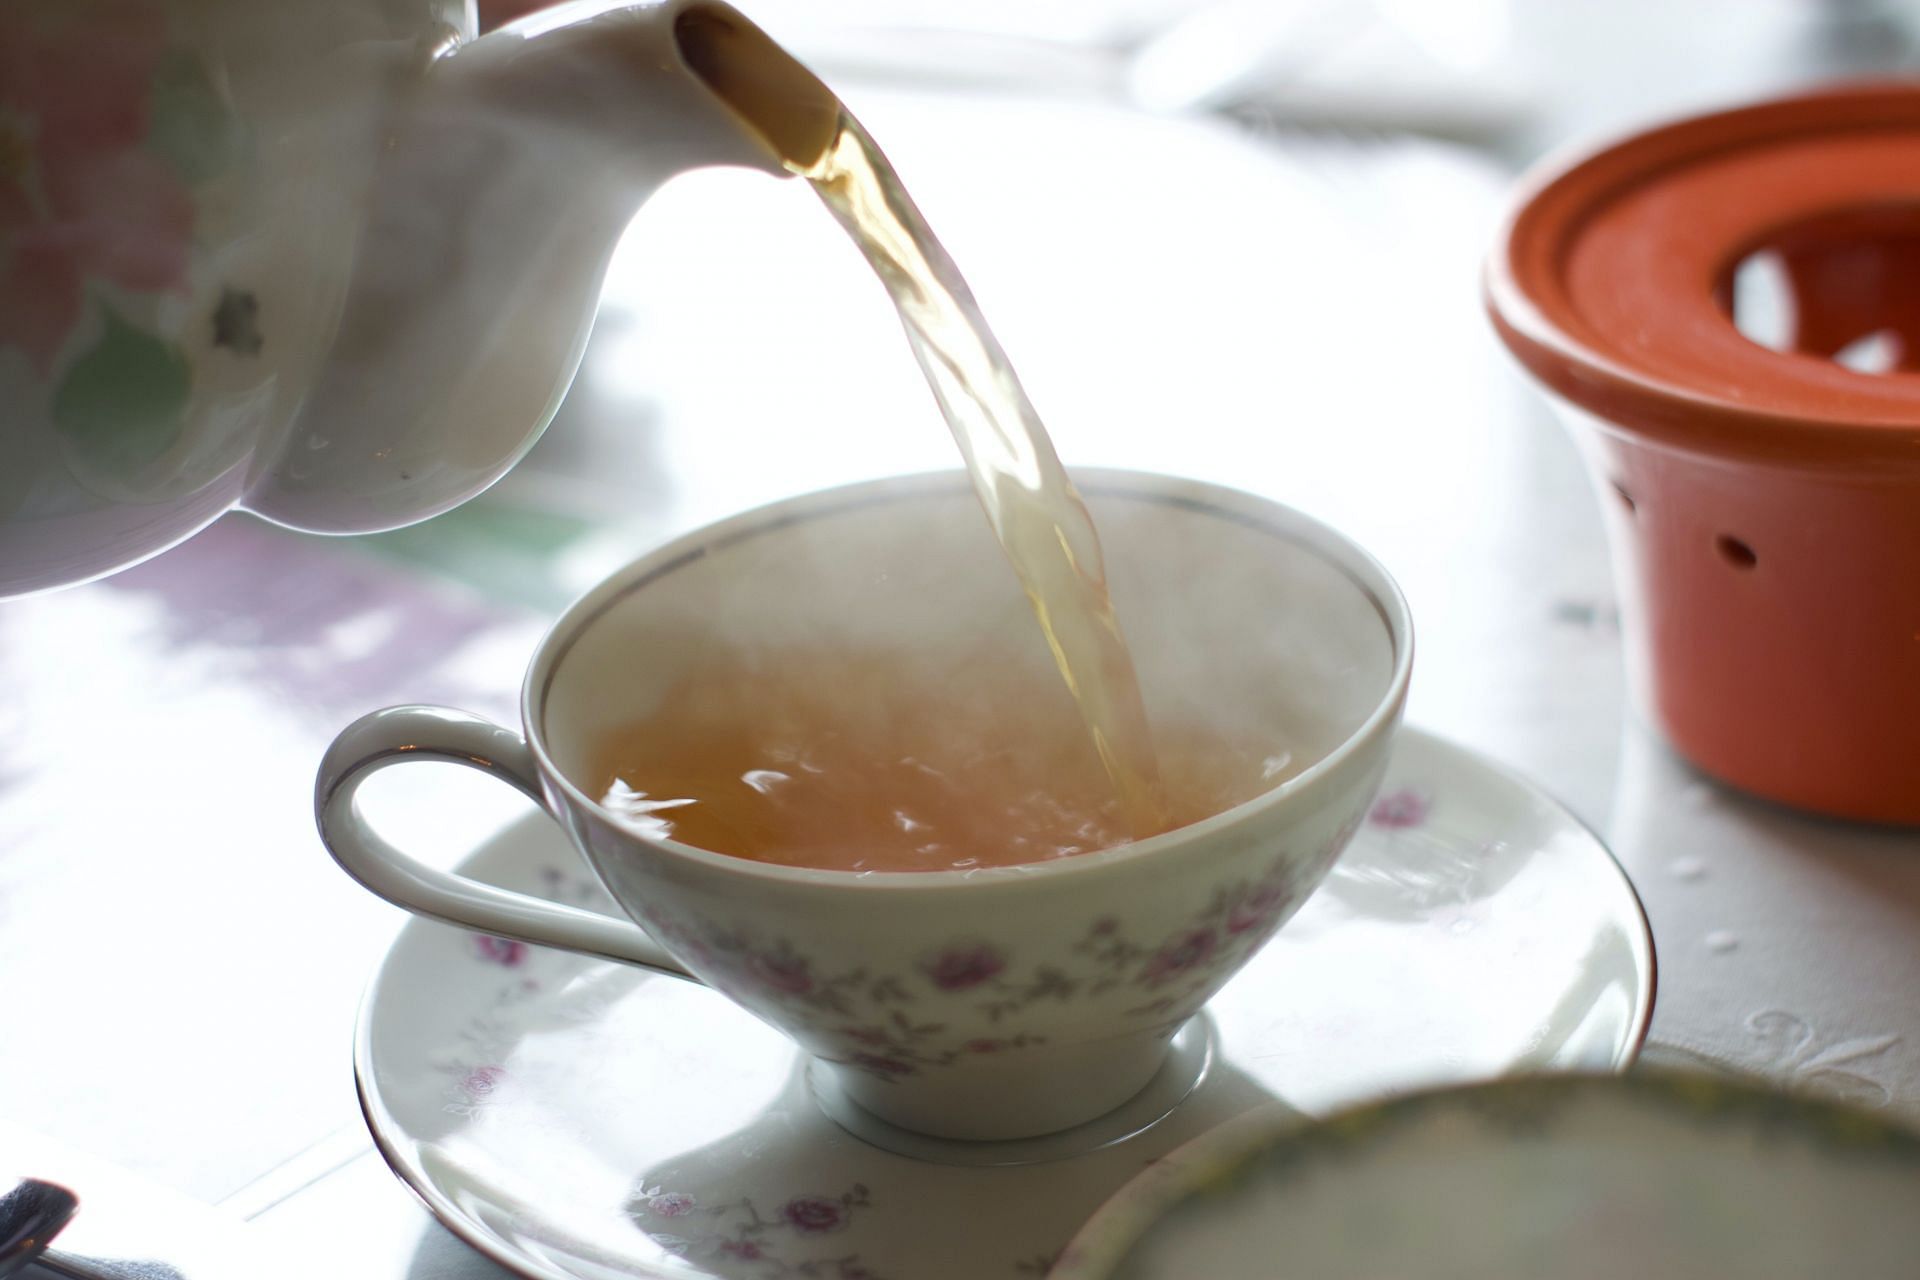 Practice daily tea ritual. (Image via Unsplash/barrett baker)